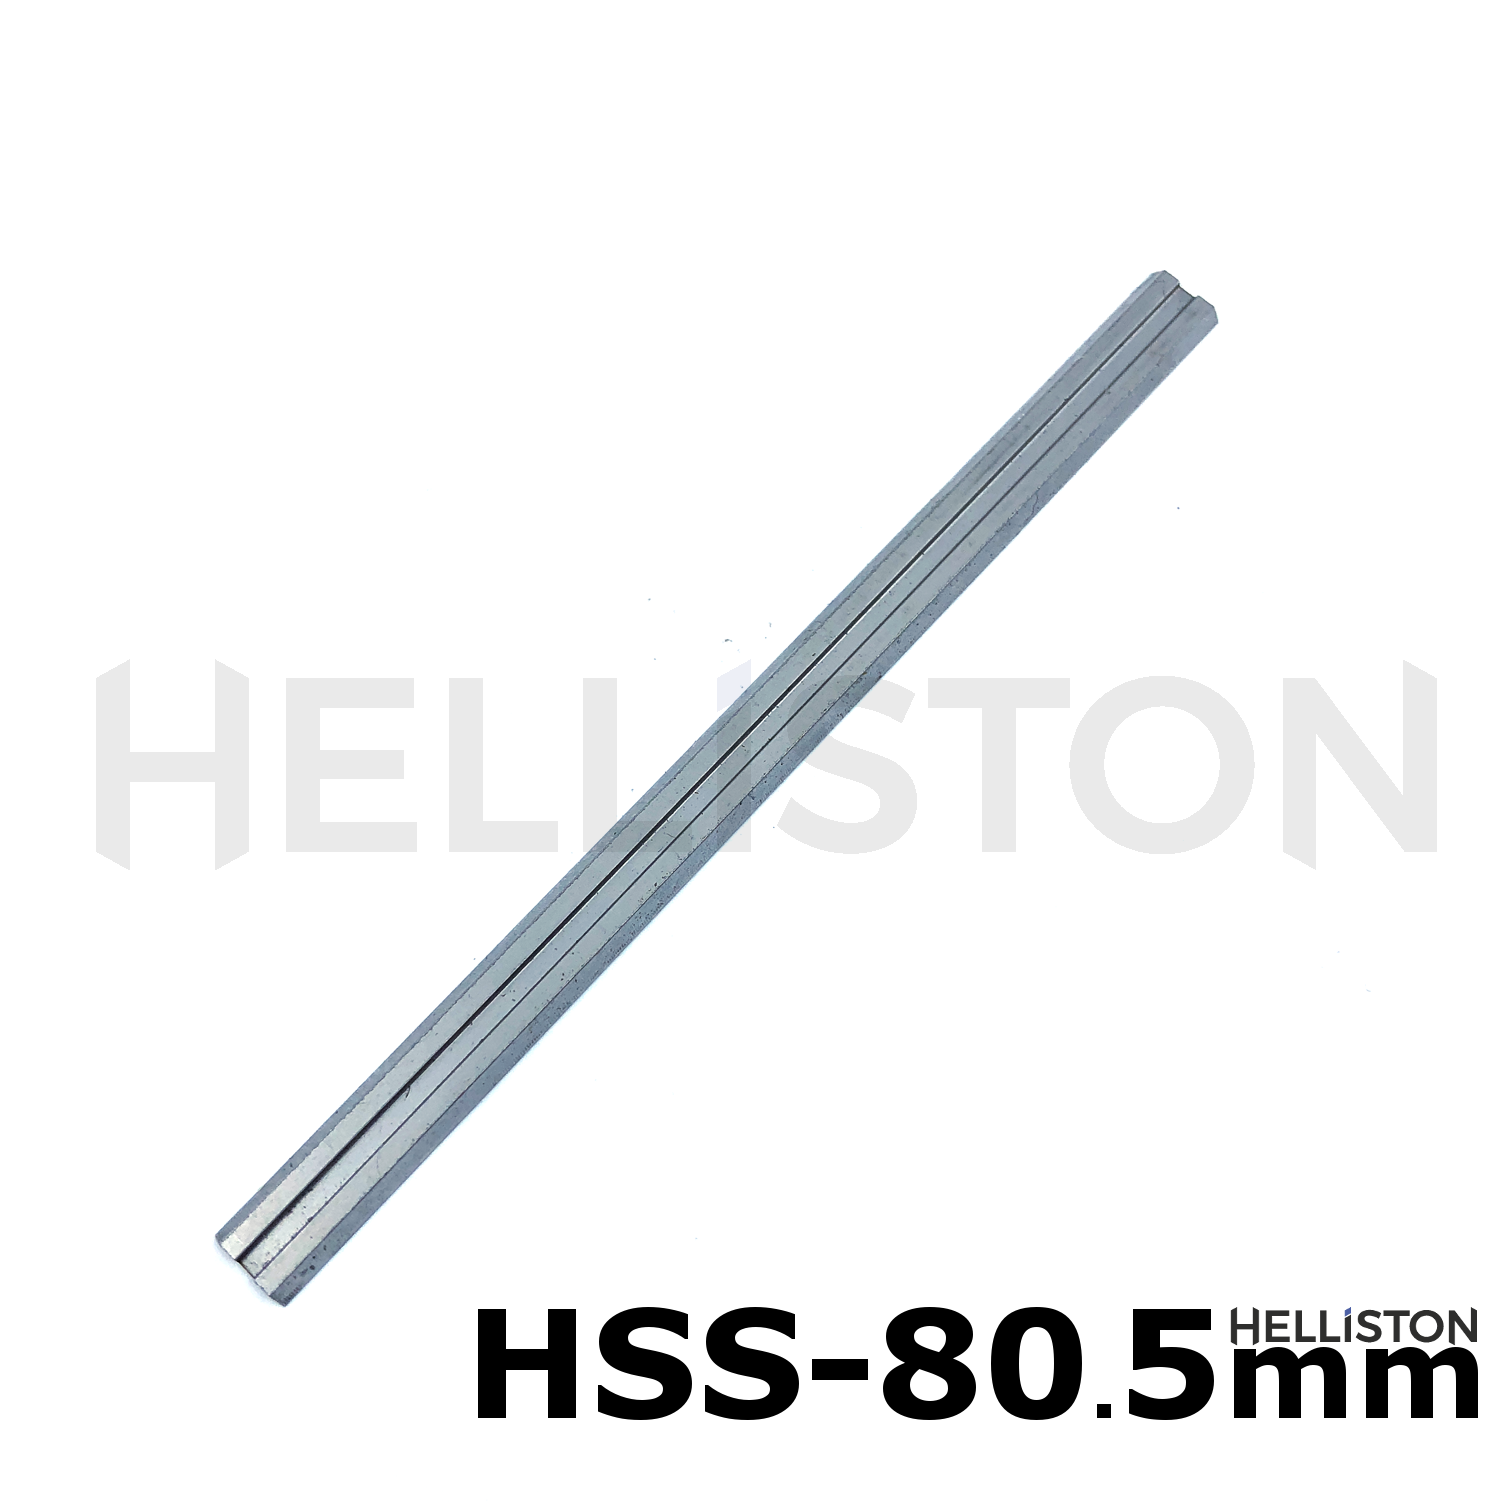 HSS Planer Blades, Reversible blades 80,5 mm, High-speed-steel, double-sided, for electrical planers, AEG 450, Dewalt DW676K, ELU MFF40, MF8F80, MFF81